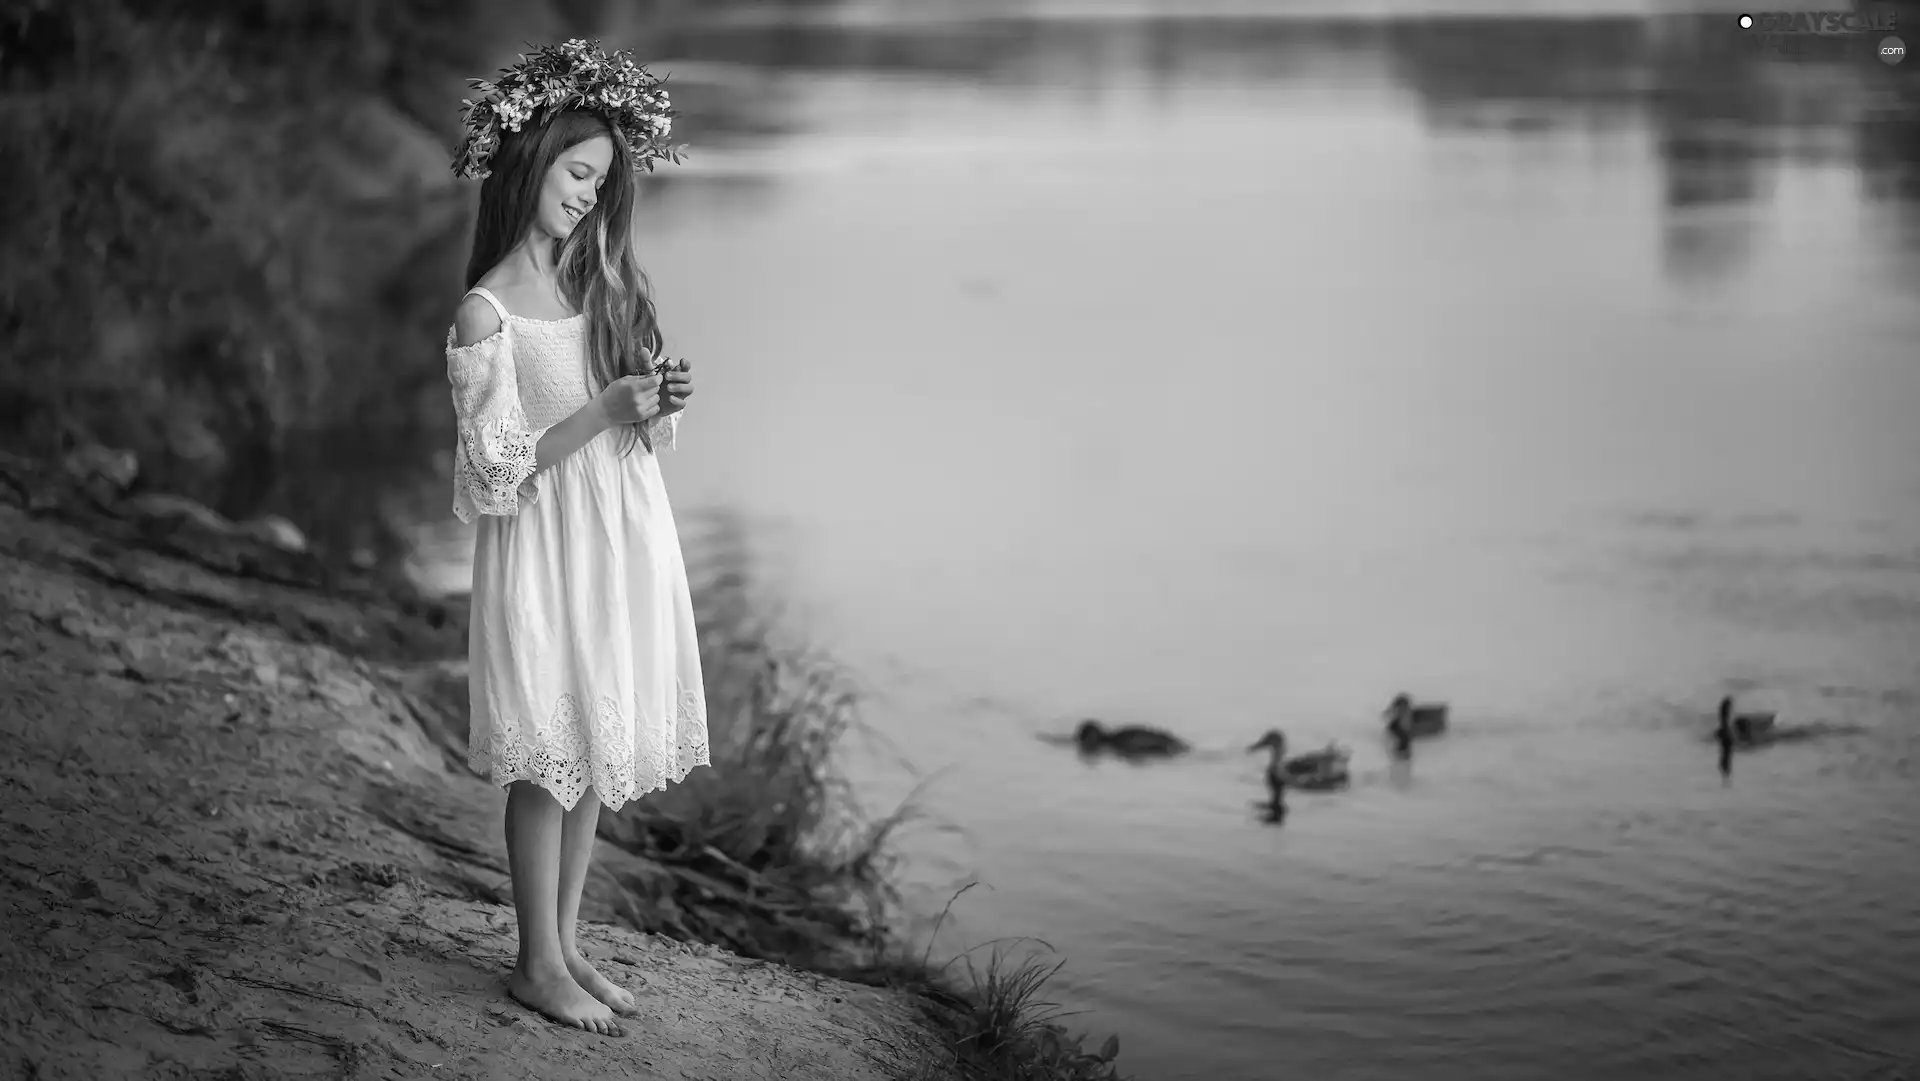 girl, River, ducks, wreath